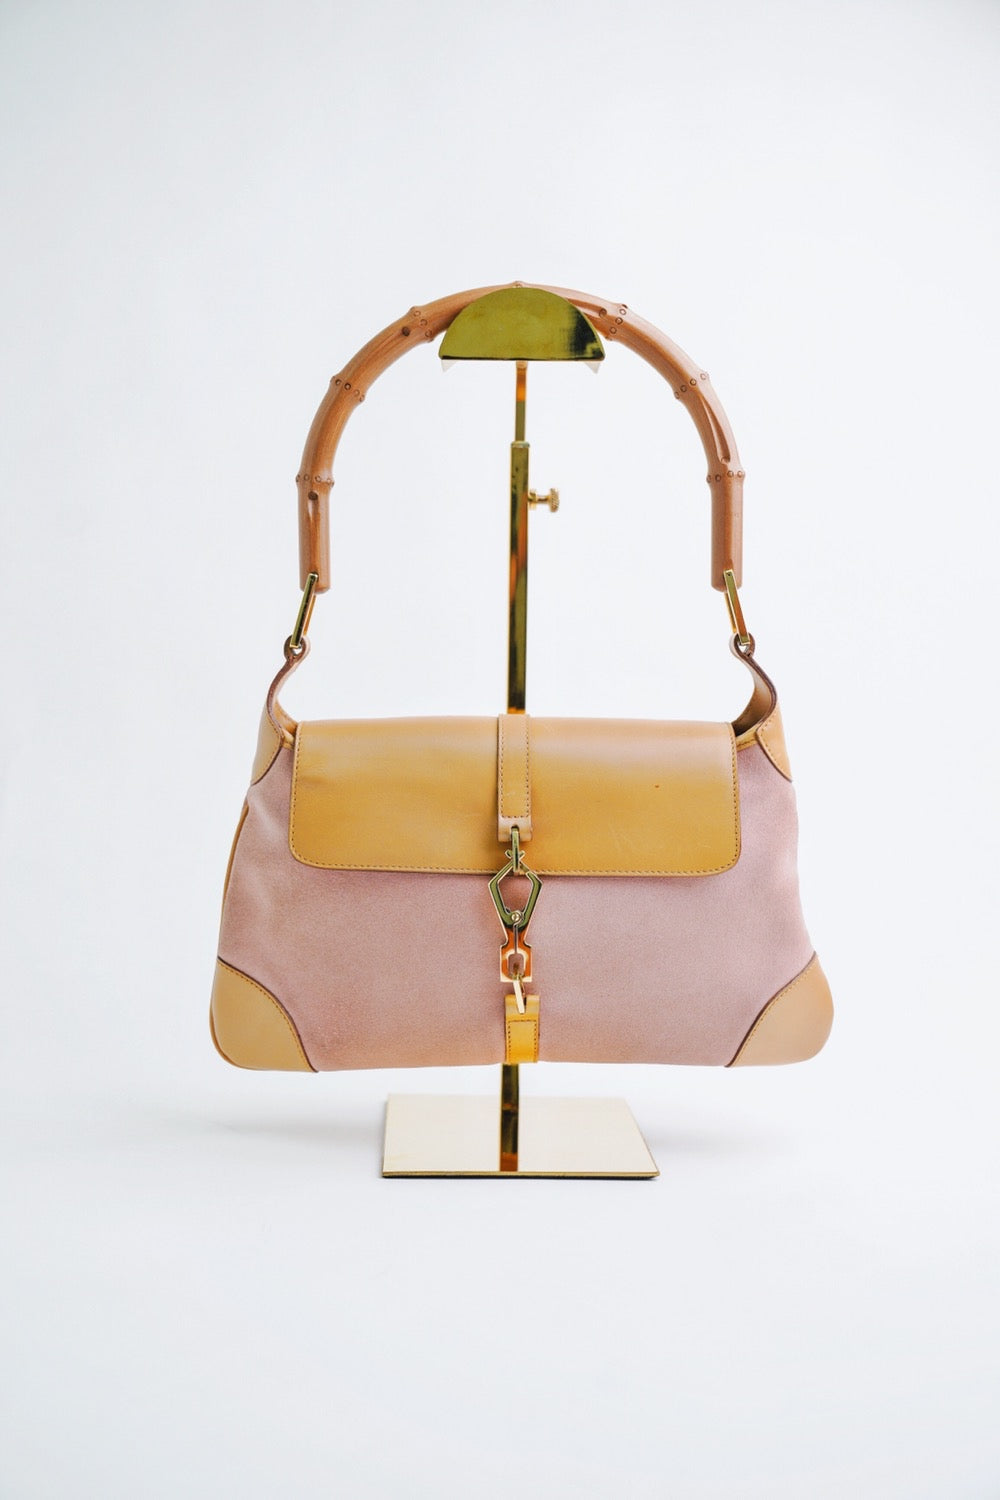 Gucci Authenticated Vintage Bamboo Handbag